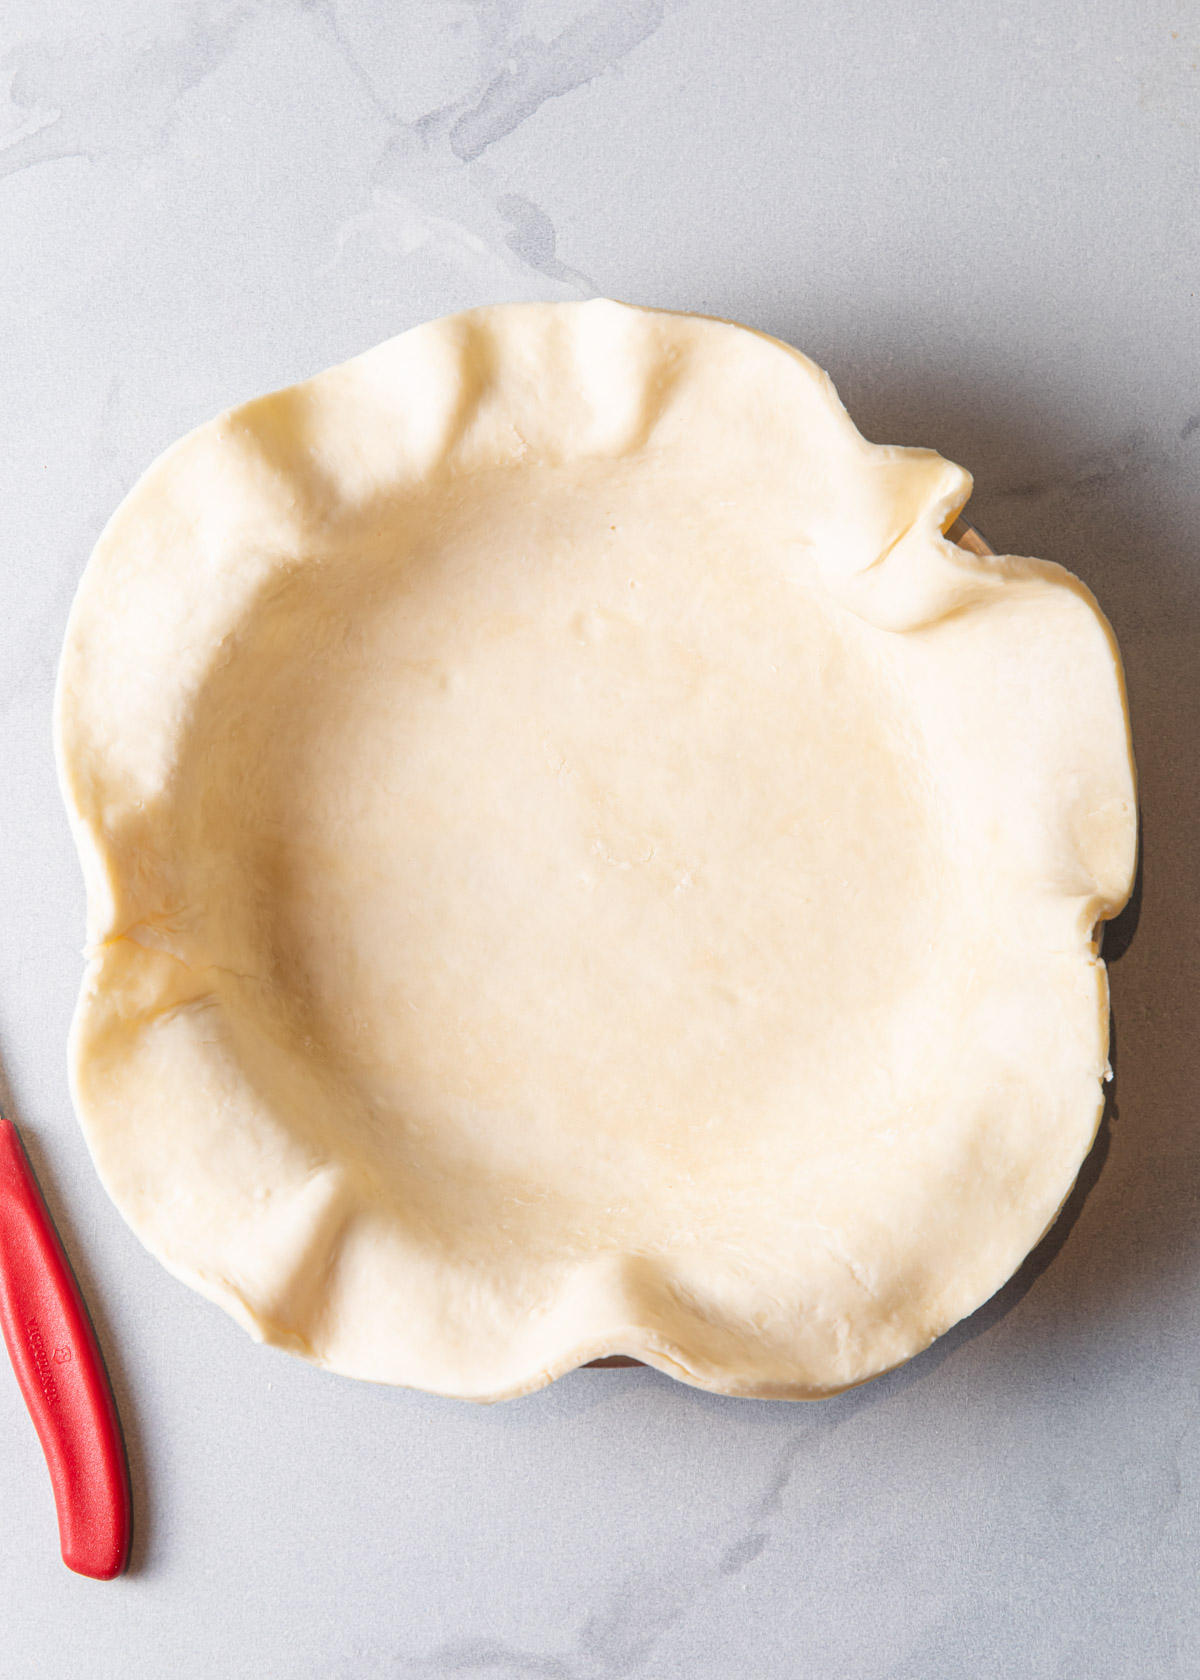 Pie dough in a pie pan before baking